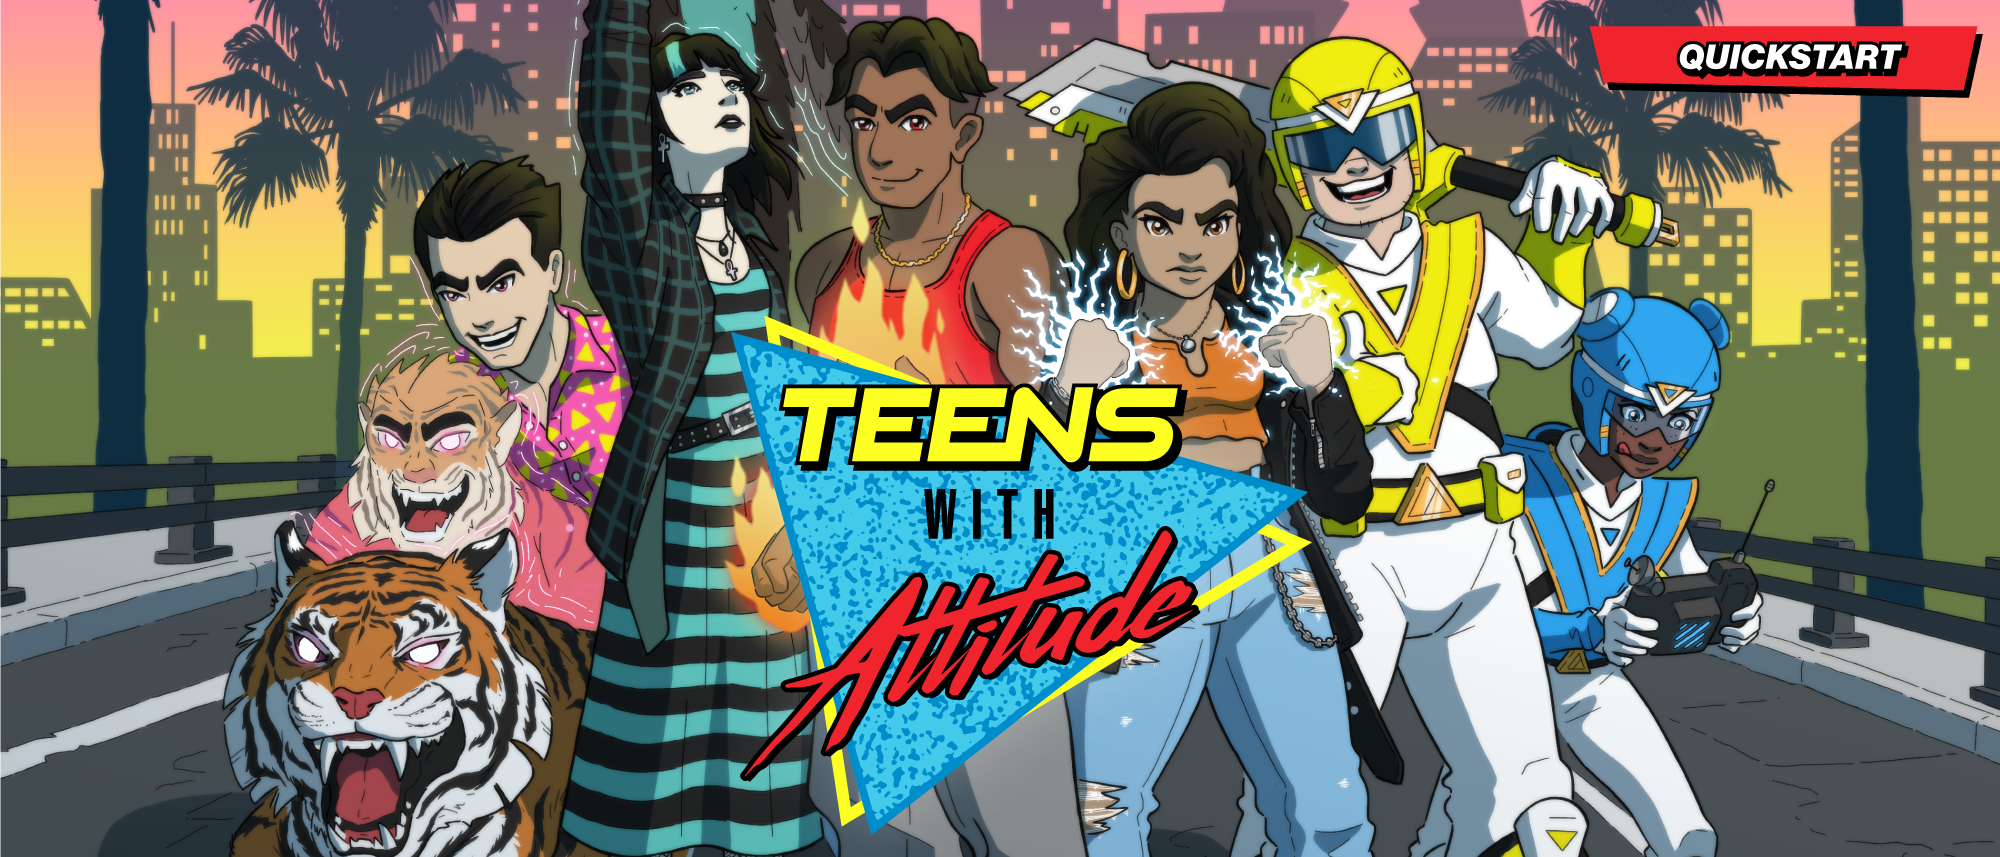 Teens with Attitude – Quickstart